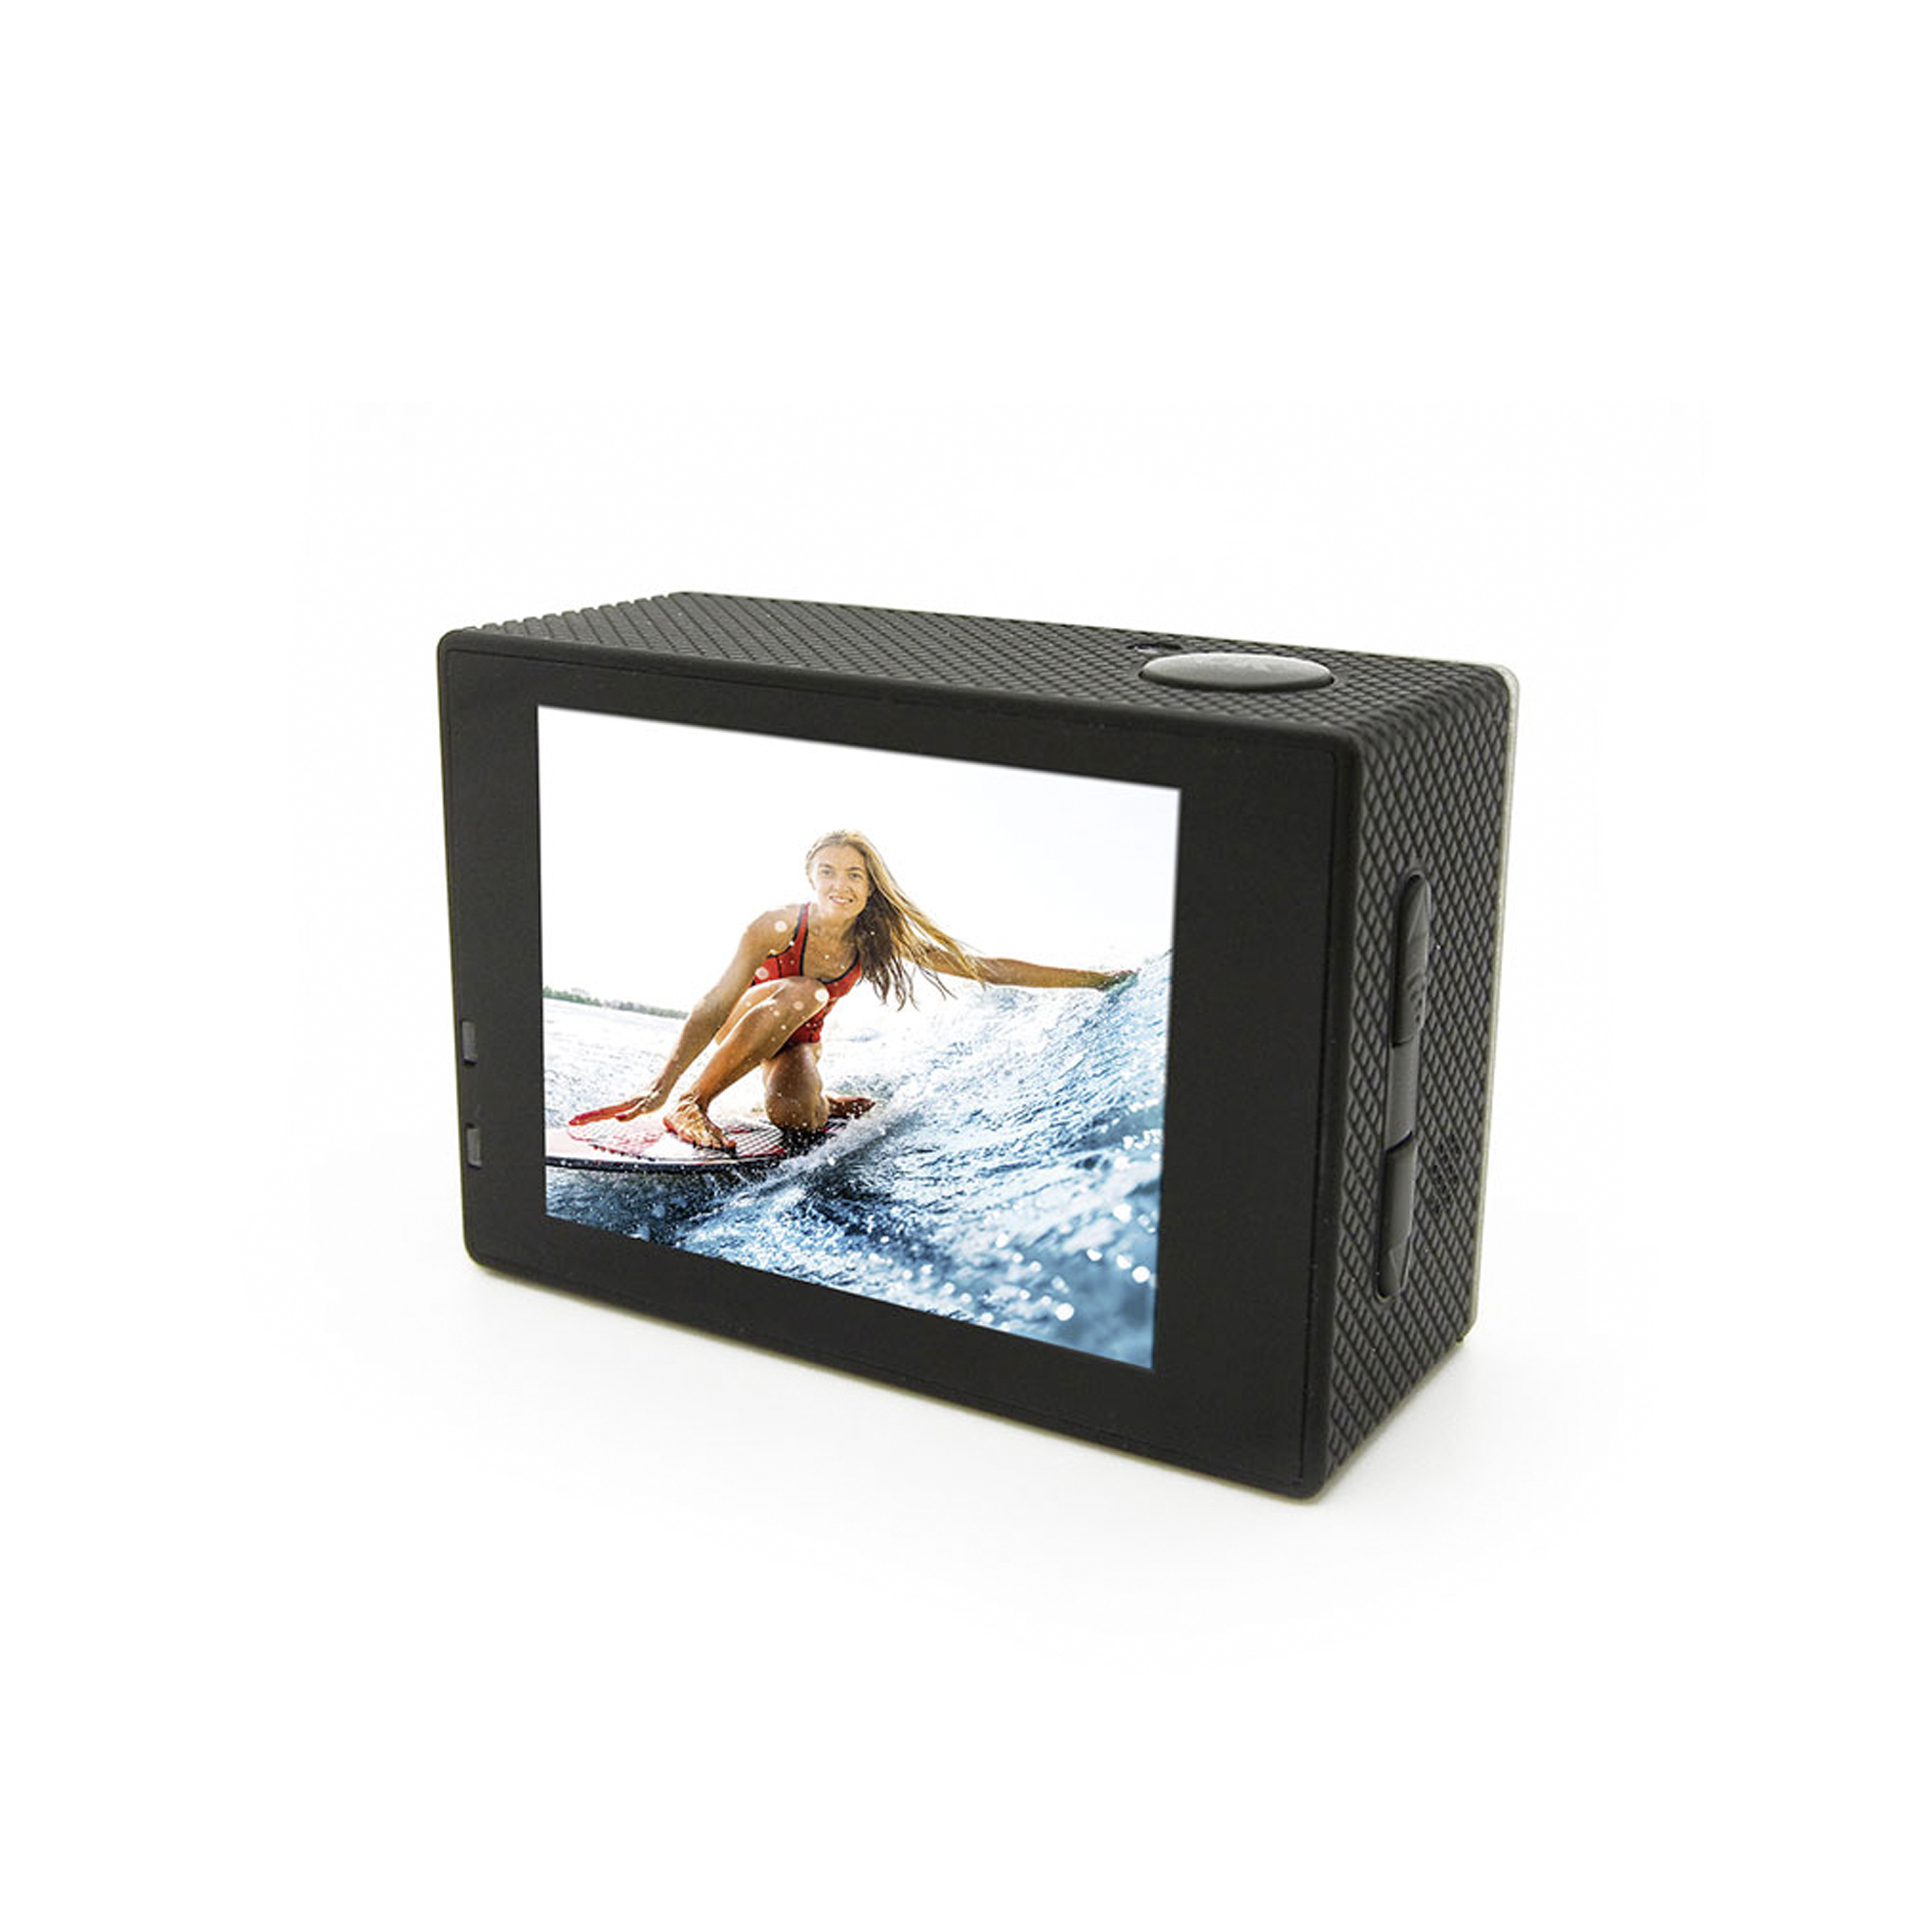 GOXTREME Vision+ 4K Actioncam inkl. Touchscreen WLAN, Fernbedienung